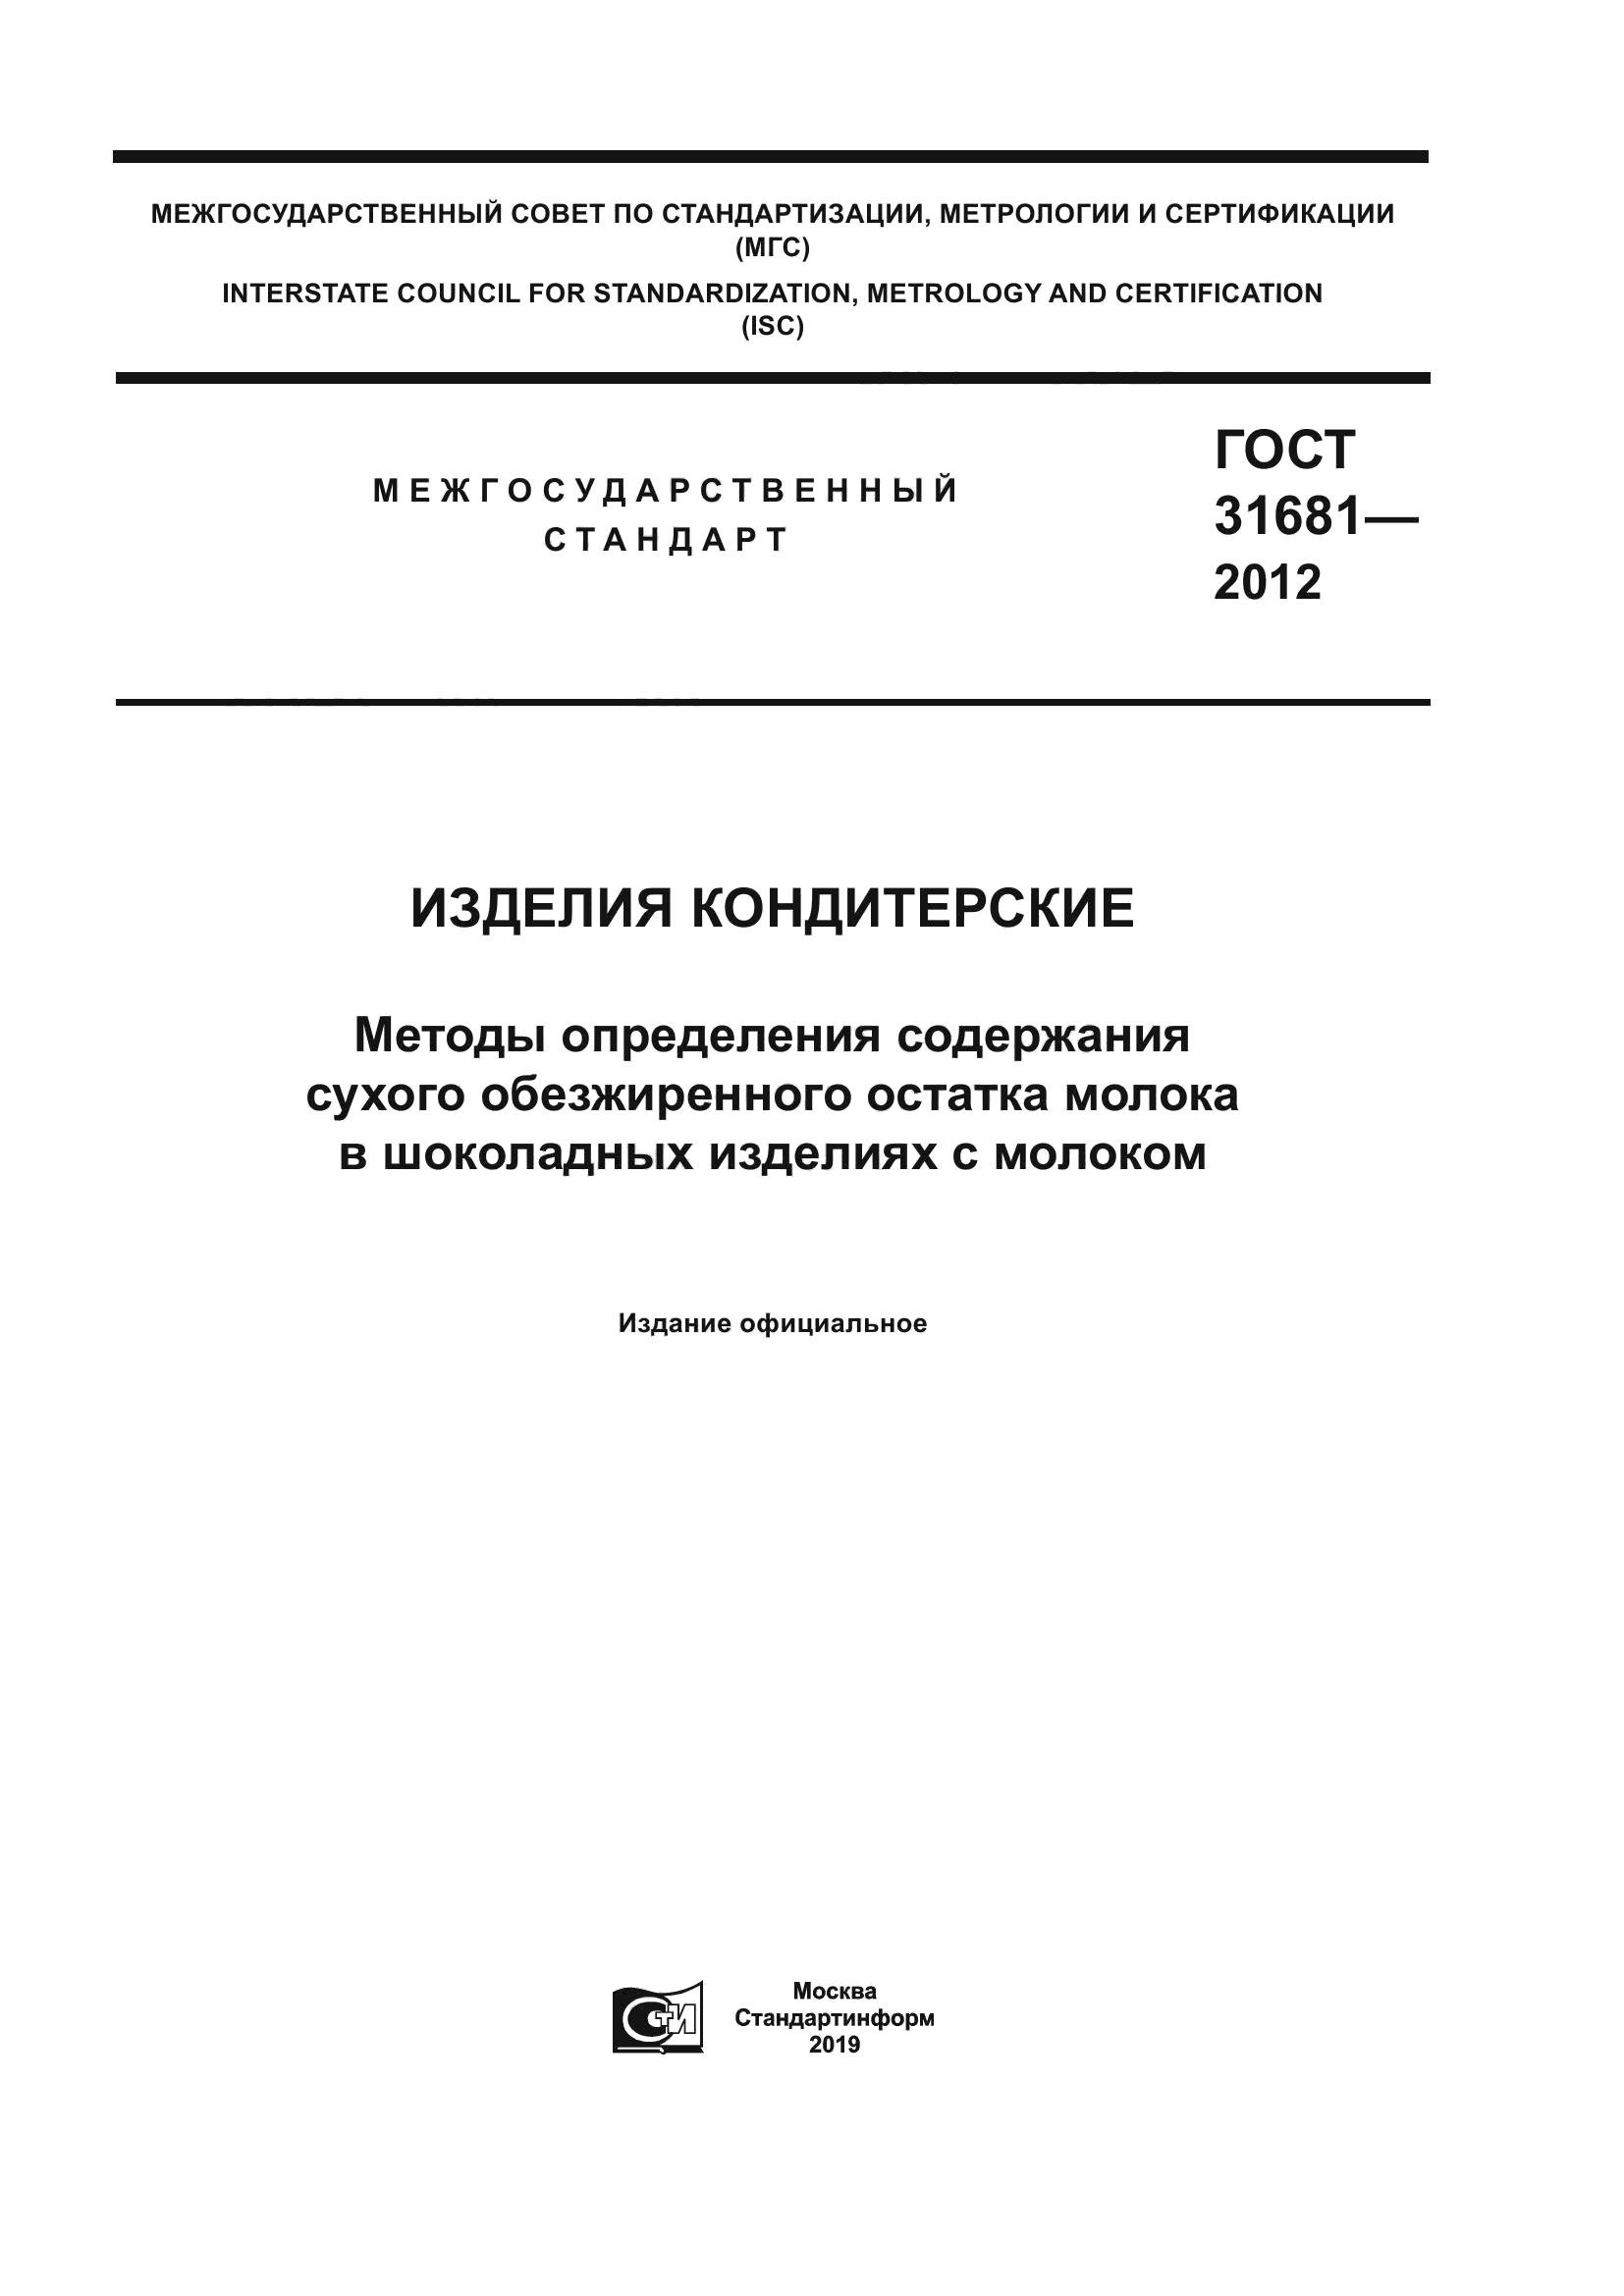 ГОСТ 31681-2012